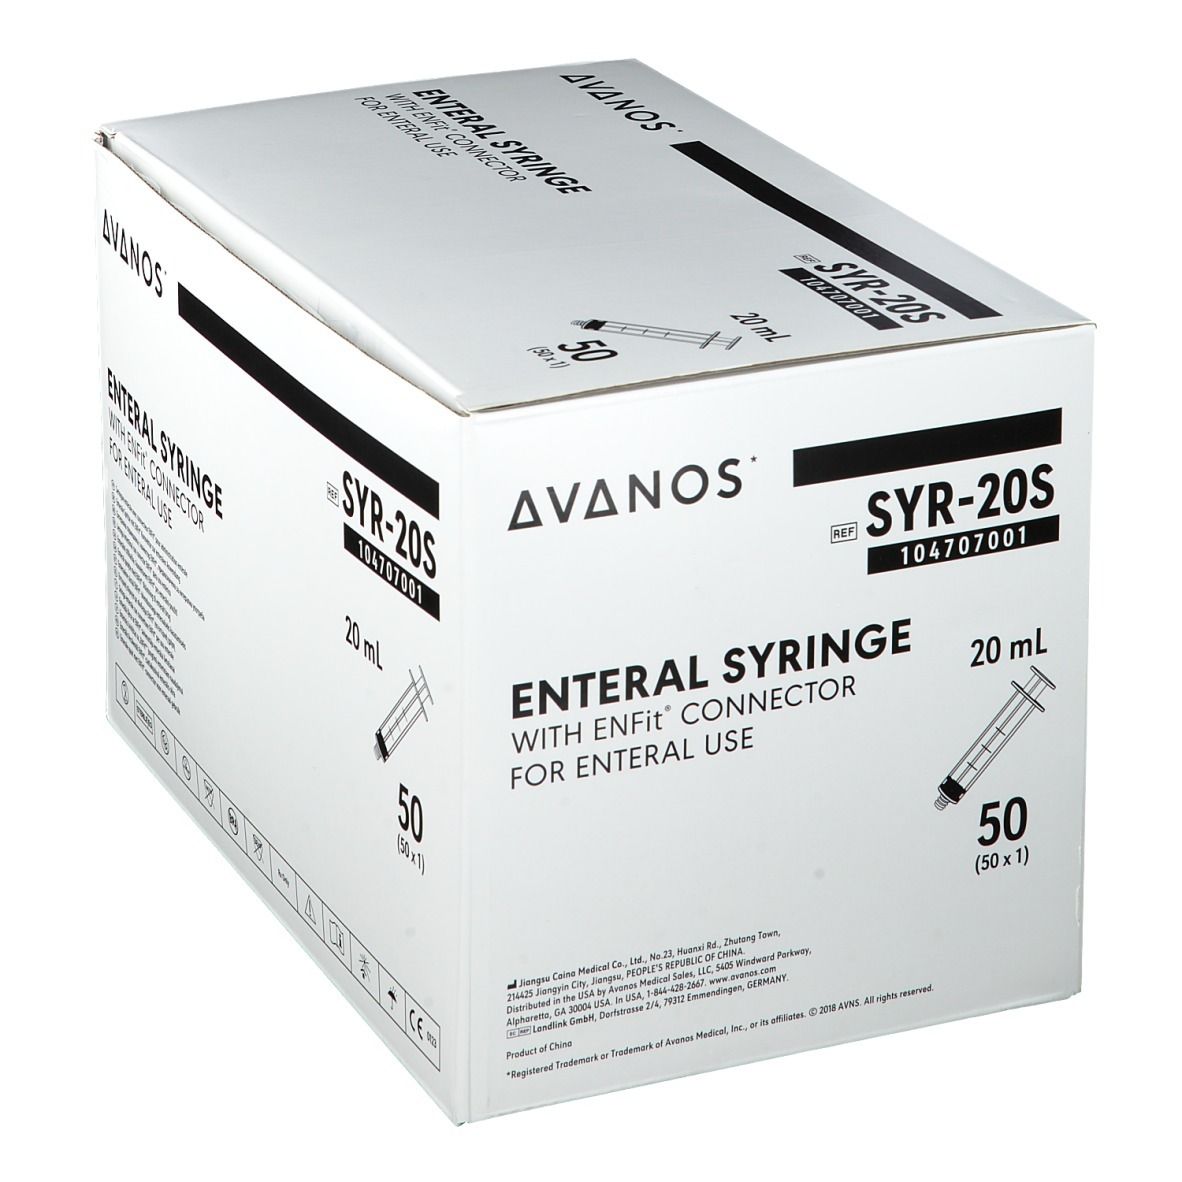 AVANOS ENTERAL SYRINGE Spritze 20 ml